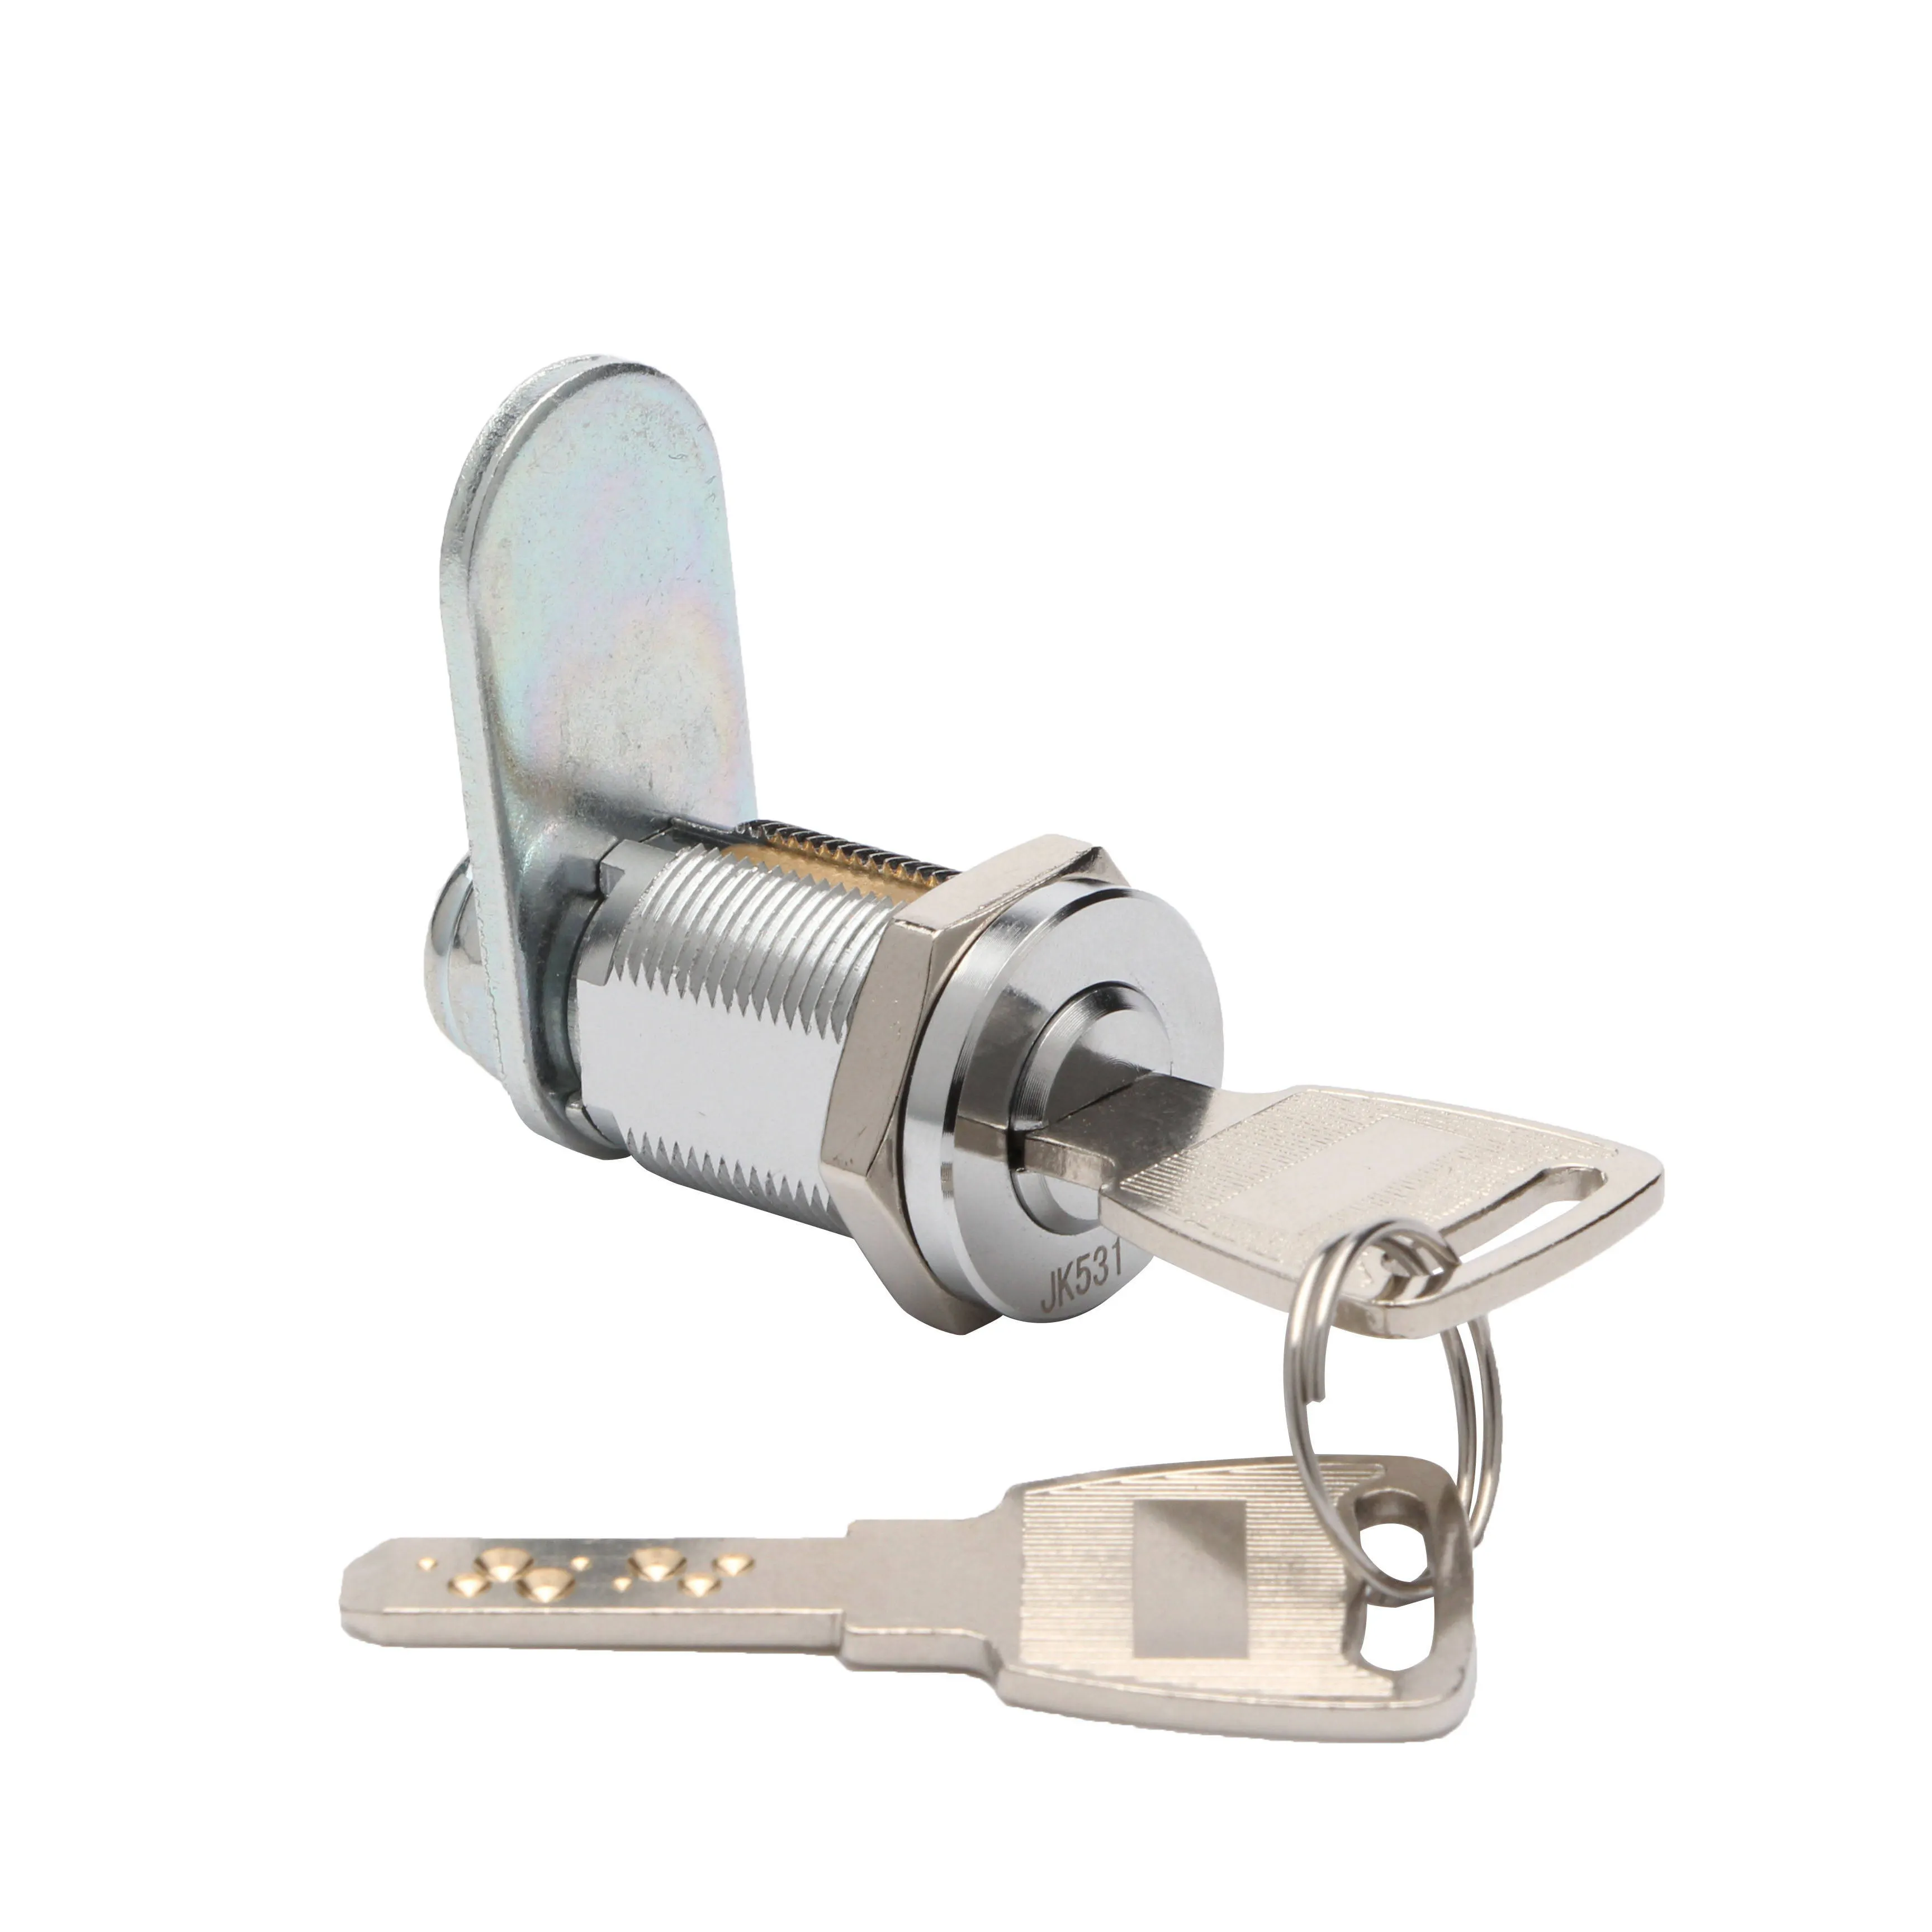 Hight Segurança JK531 Porta Cilindro Gabinete Dimple Key Cam Lock Máquina Vending Cilindro Bloqueio